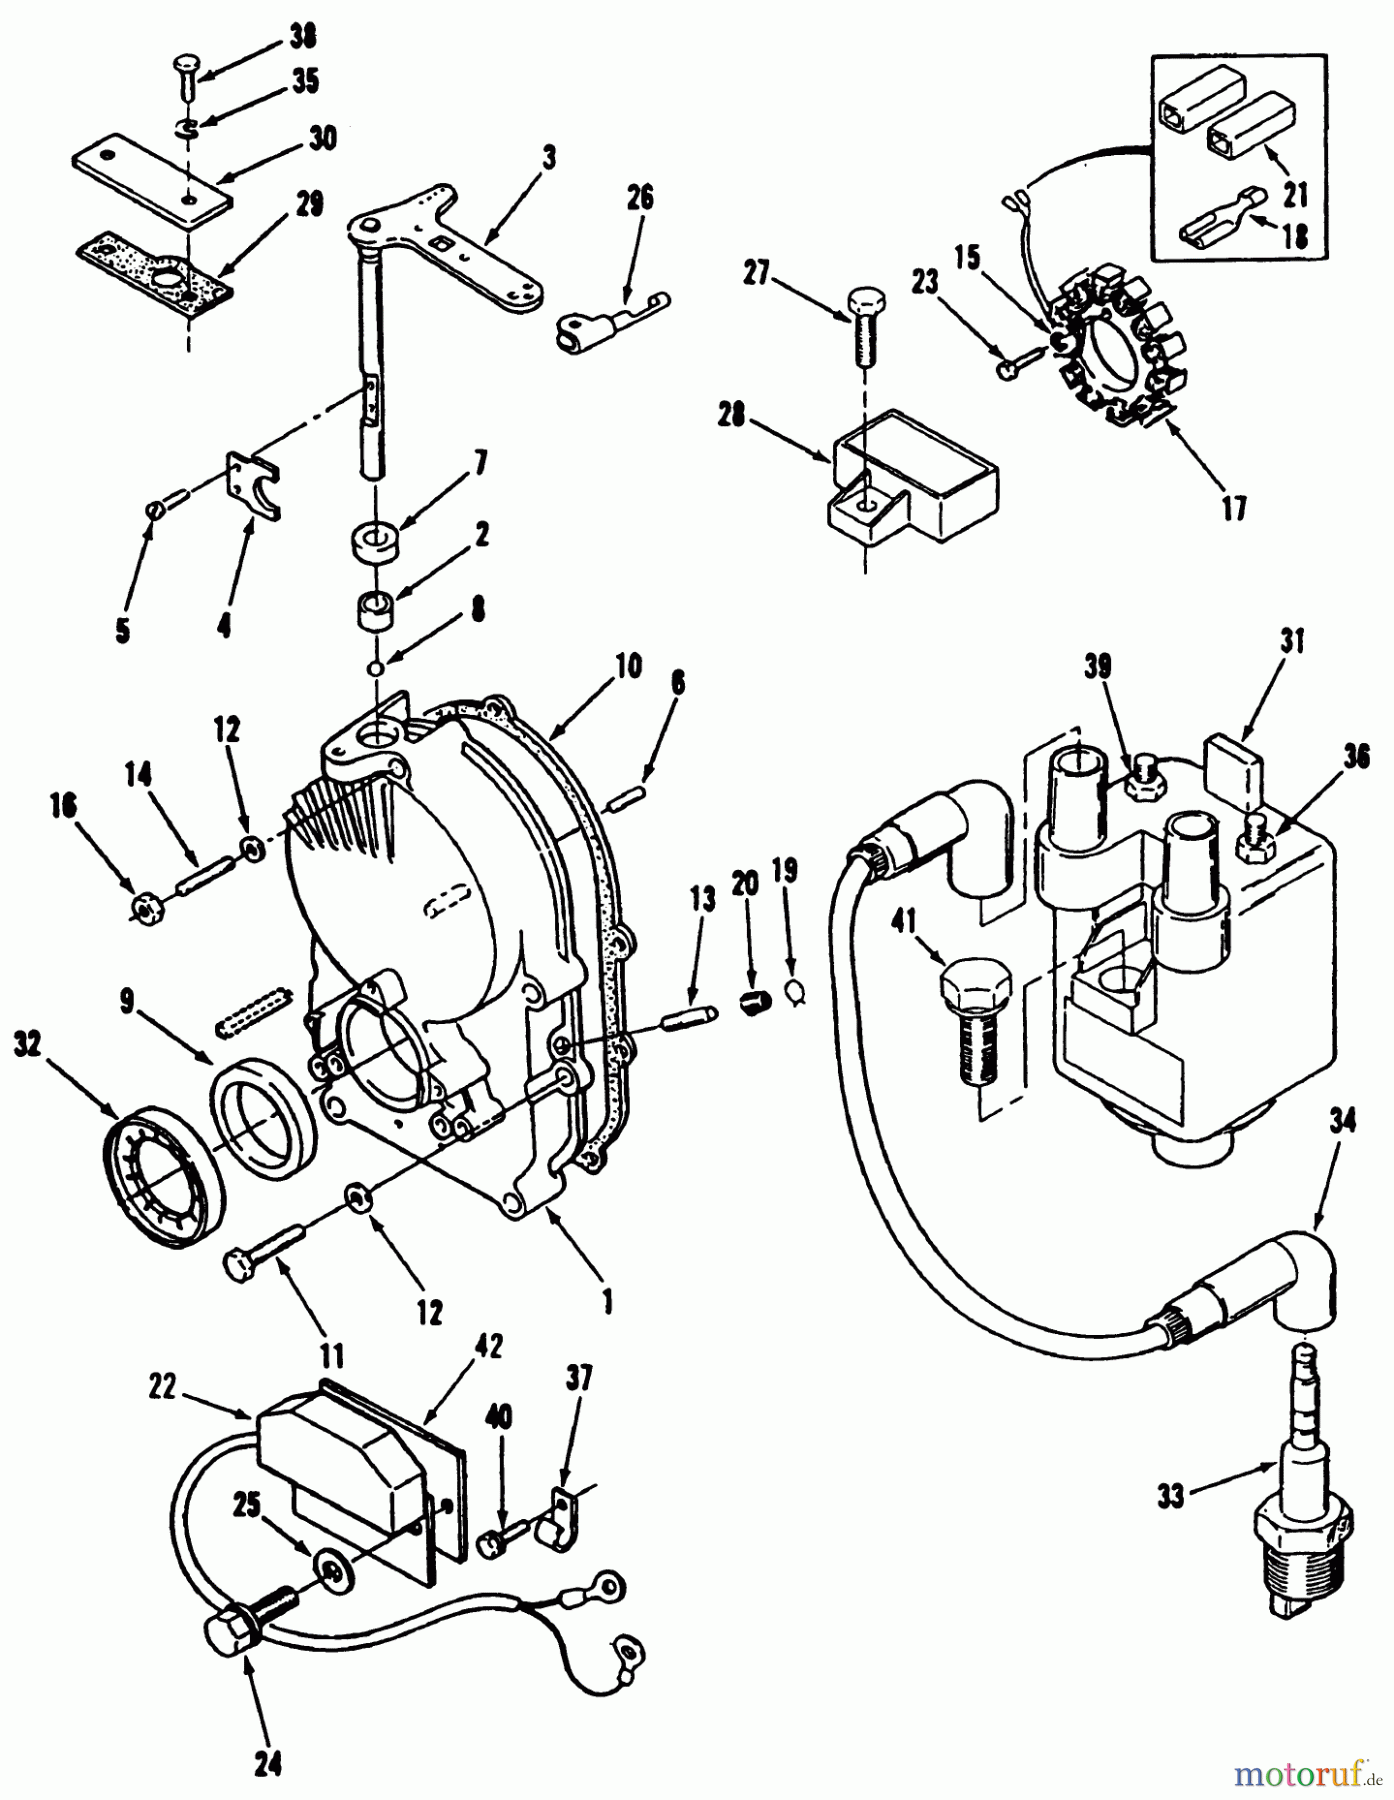  Toro Neu Mowers, Lawn & Garden Tractor Seite 1 31-16O804 (416-8) - Toro 416-8 Garden Tractor, 1992 (2000001-2999999) GEARCASE AND IGNITION CONTROLS POWER PLUS